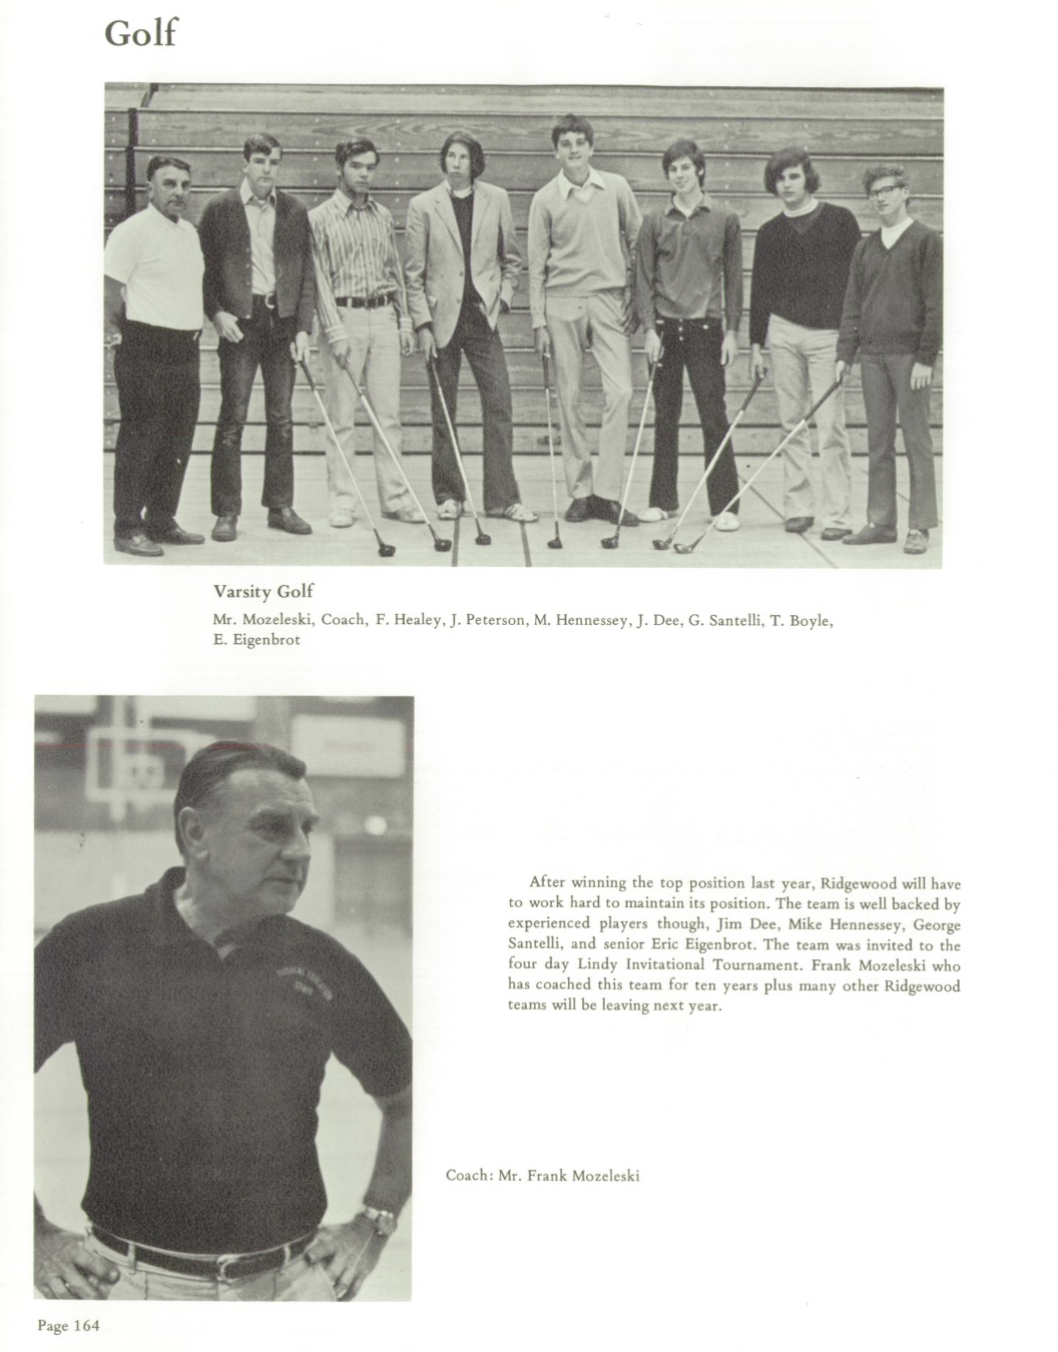 1971 Boys’ Golf Team